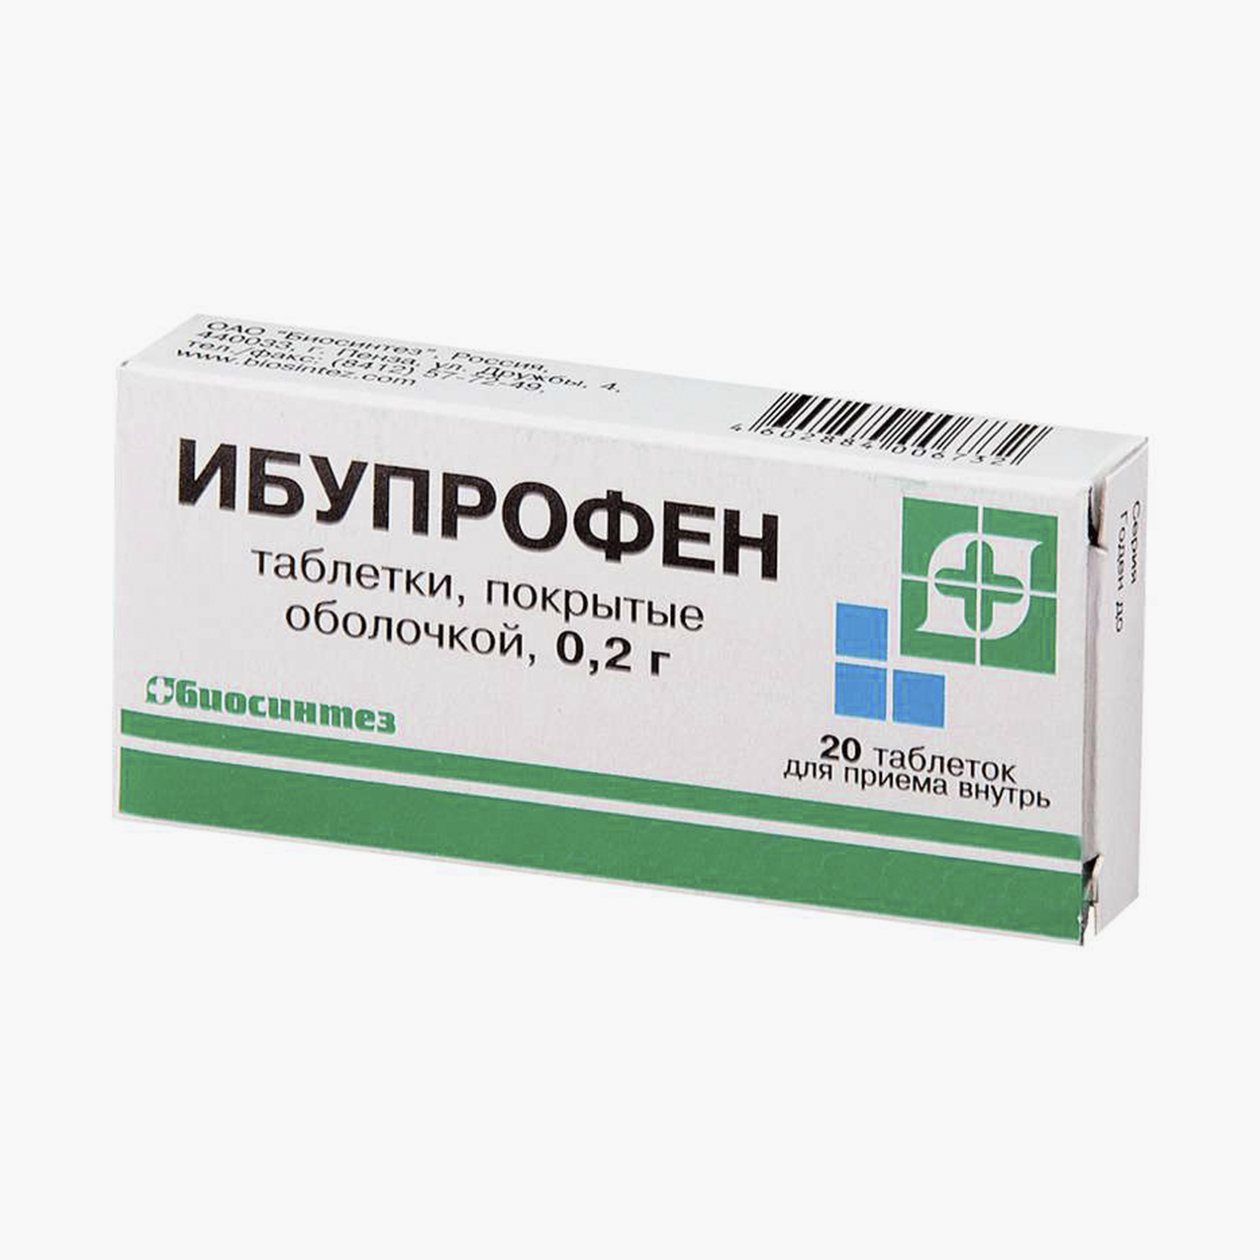 20 таблеток ибупрофена 200 мг чуть дороже — от 20 ₽. Источник: asna.ru